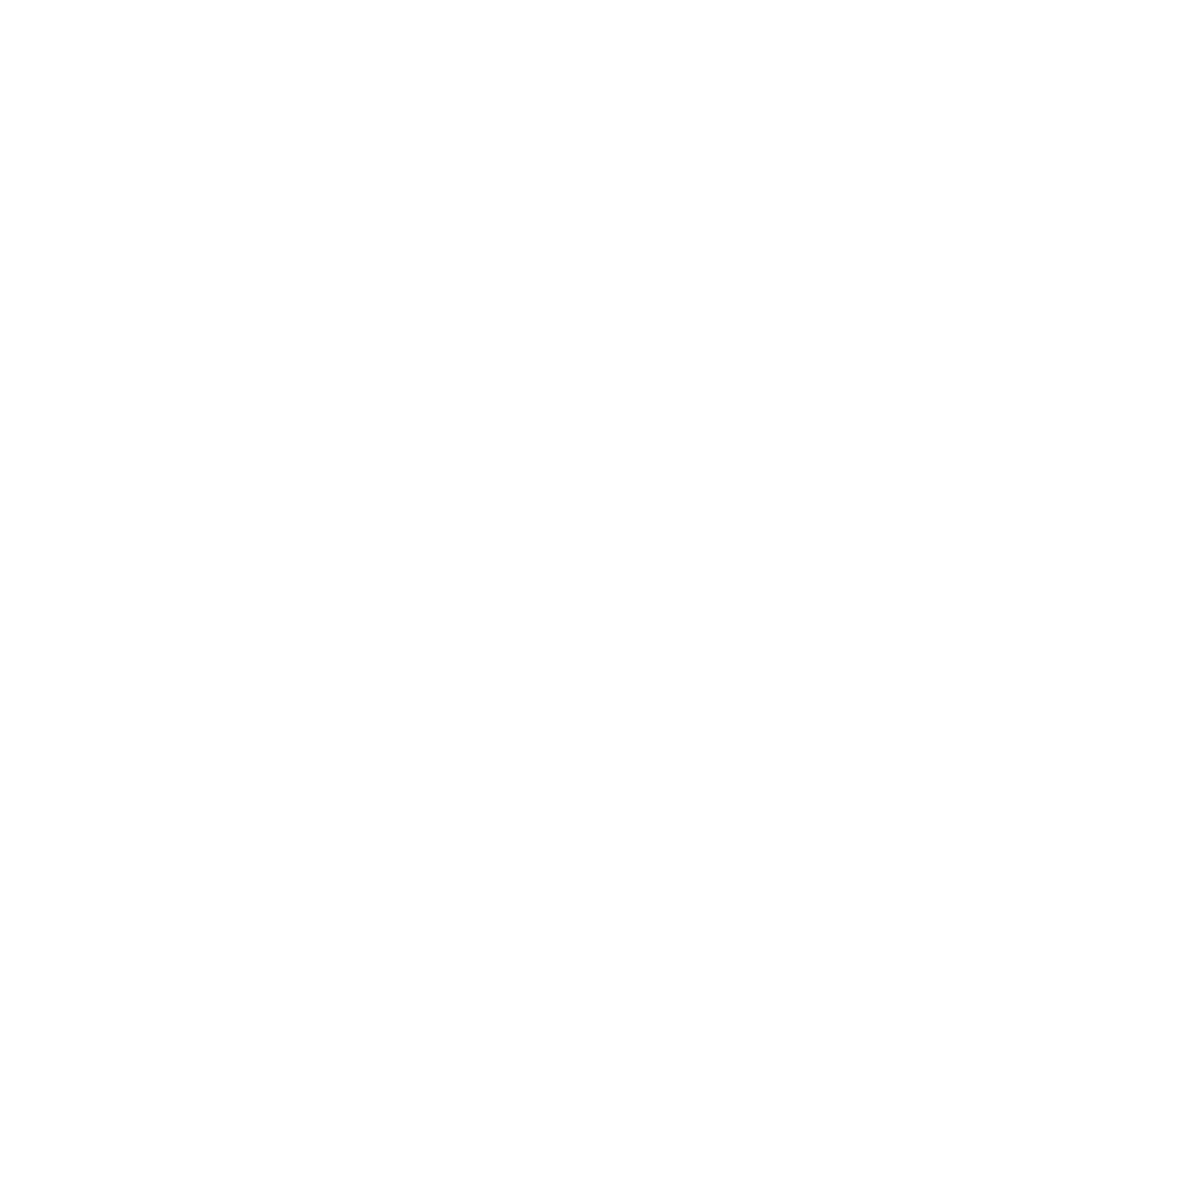 Seculabs